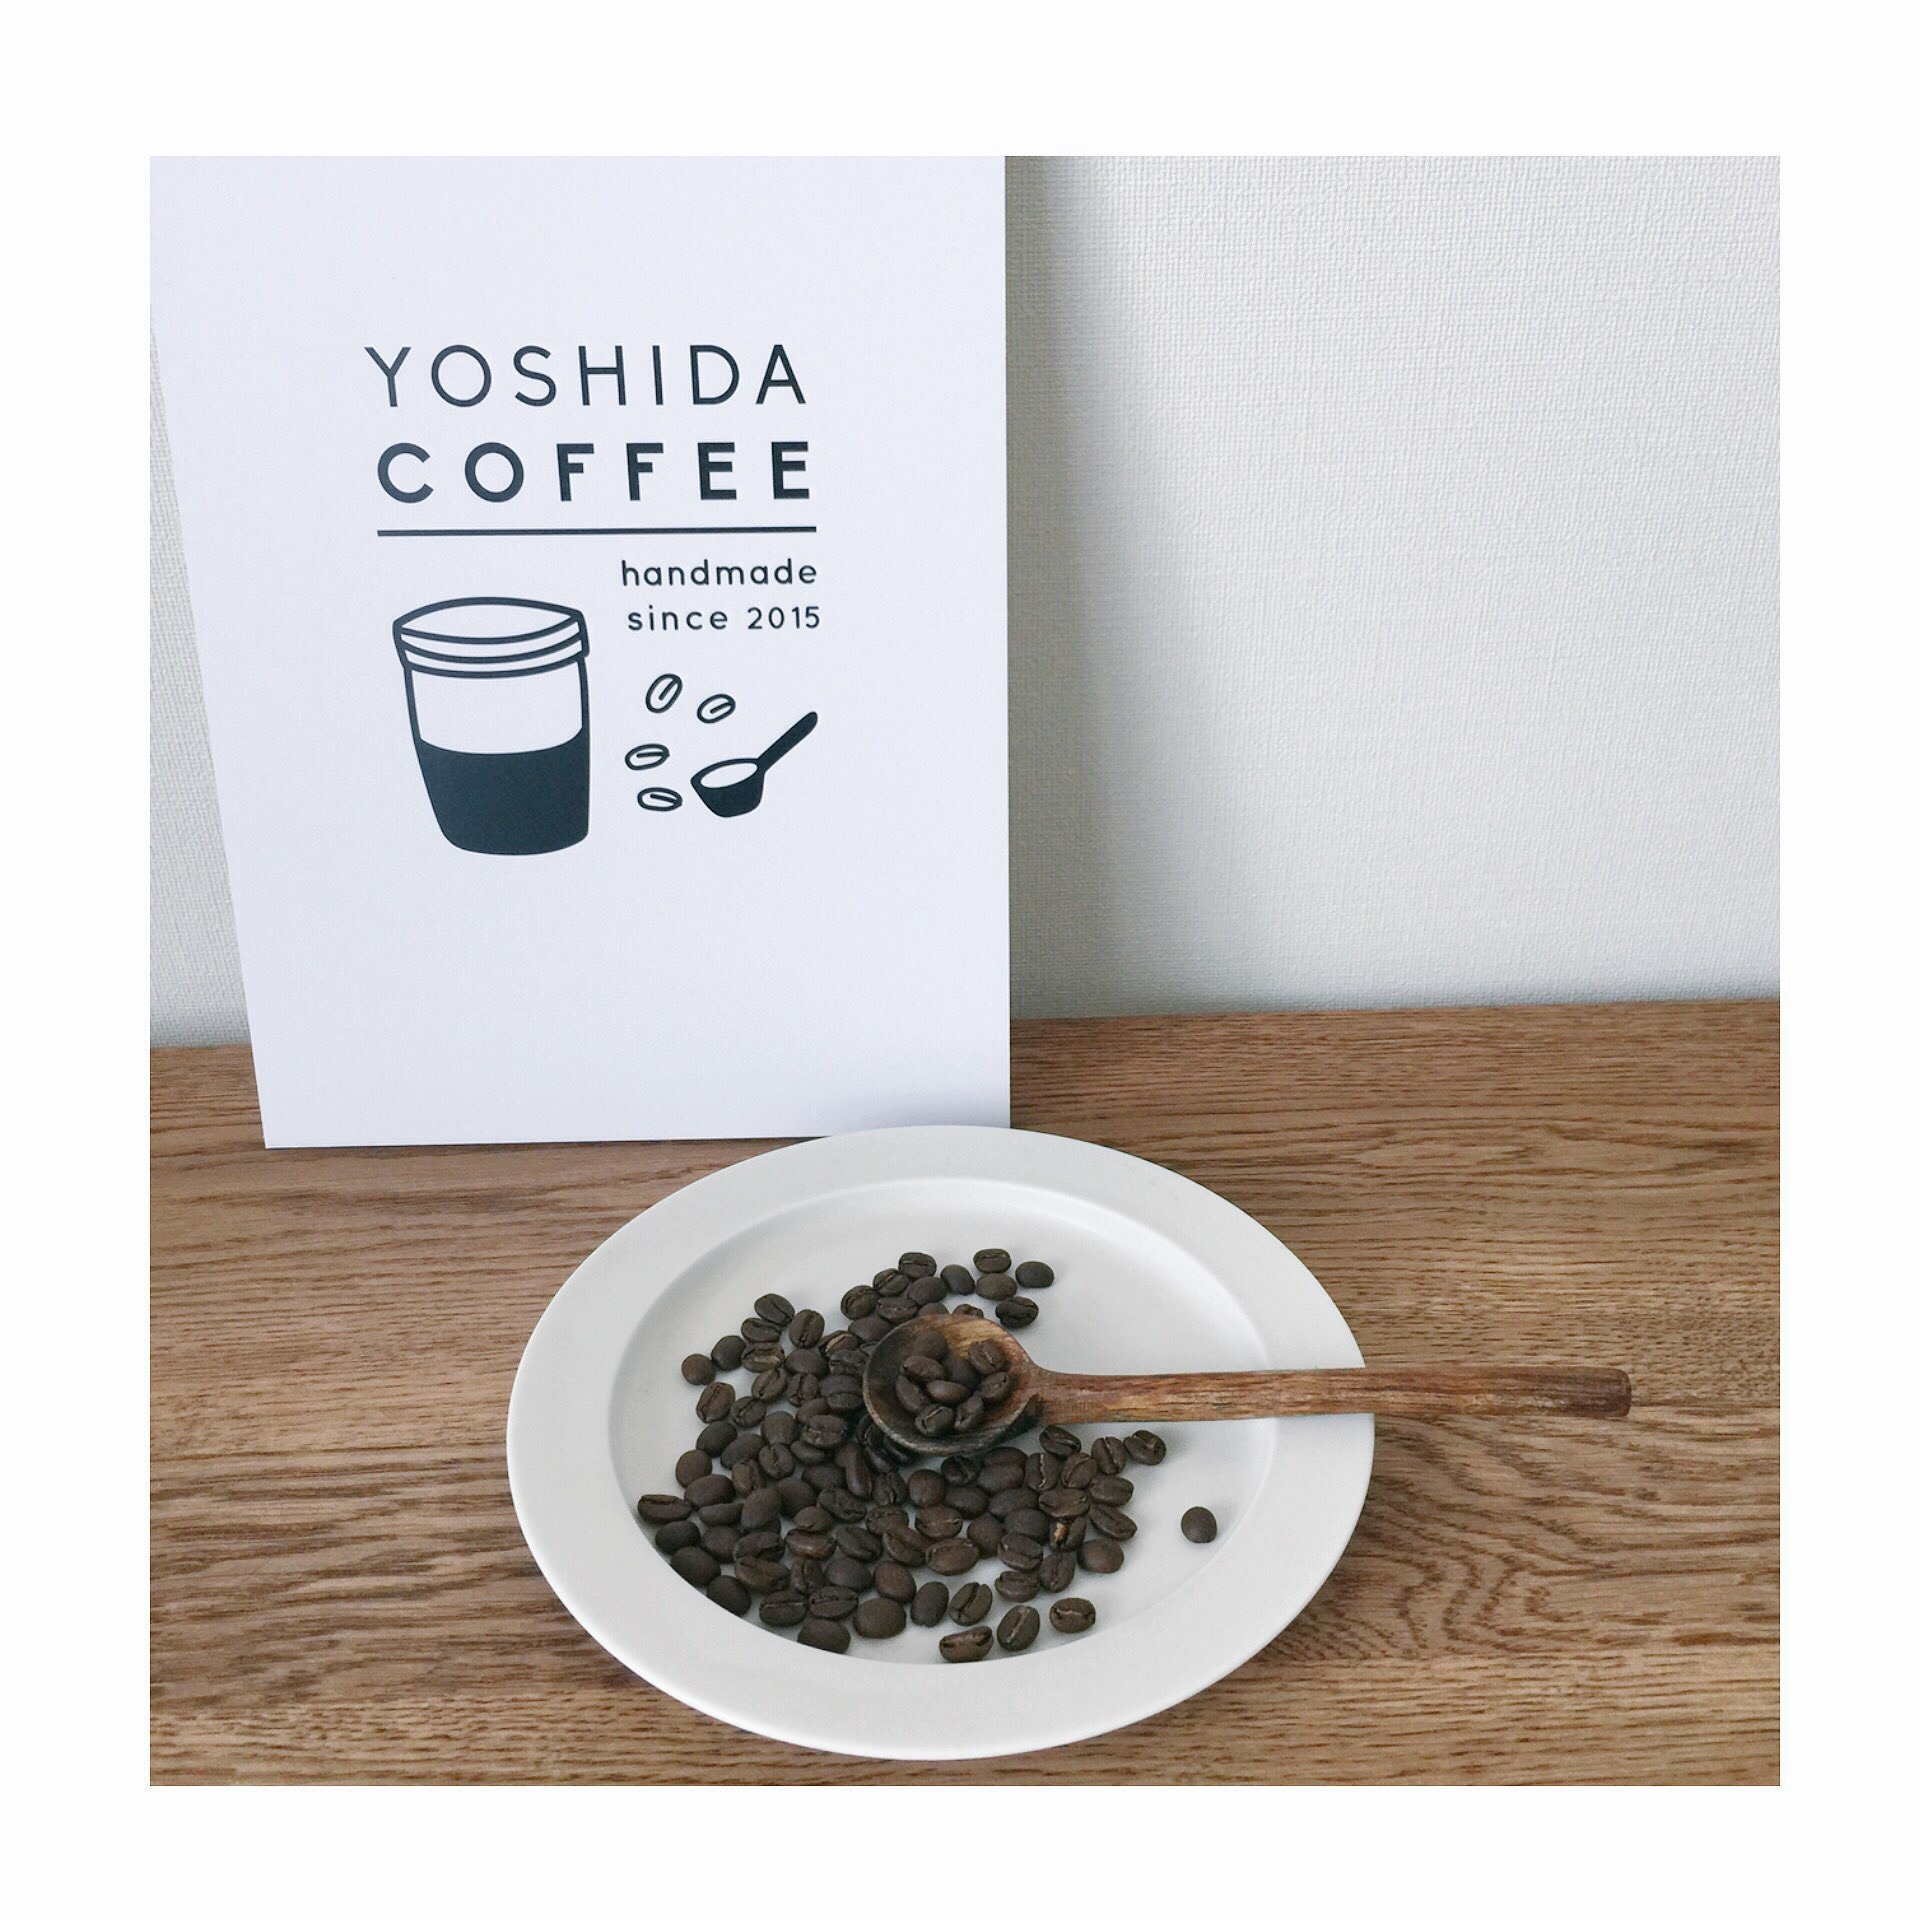 YOSHIDA COFFEE